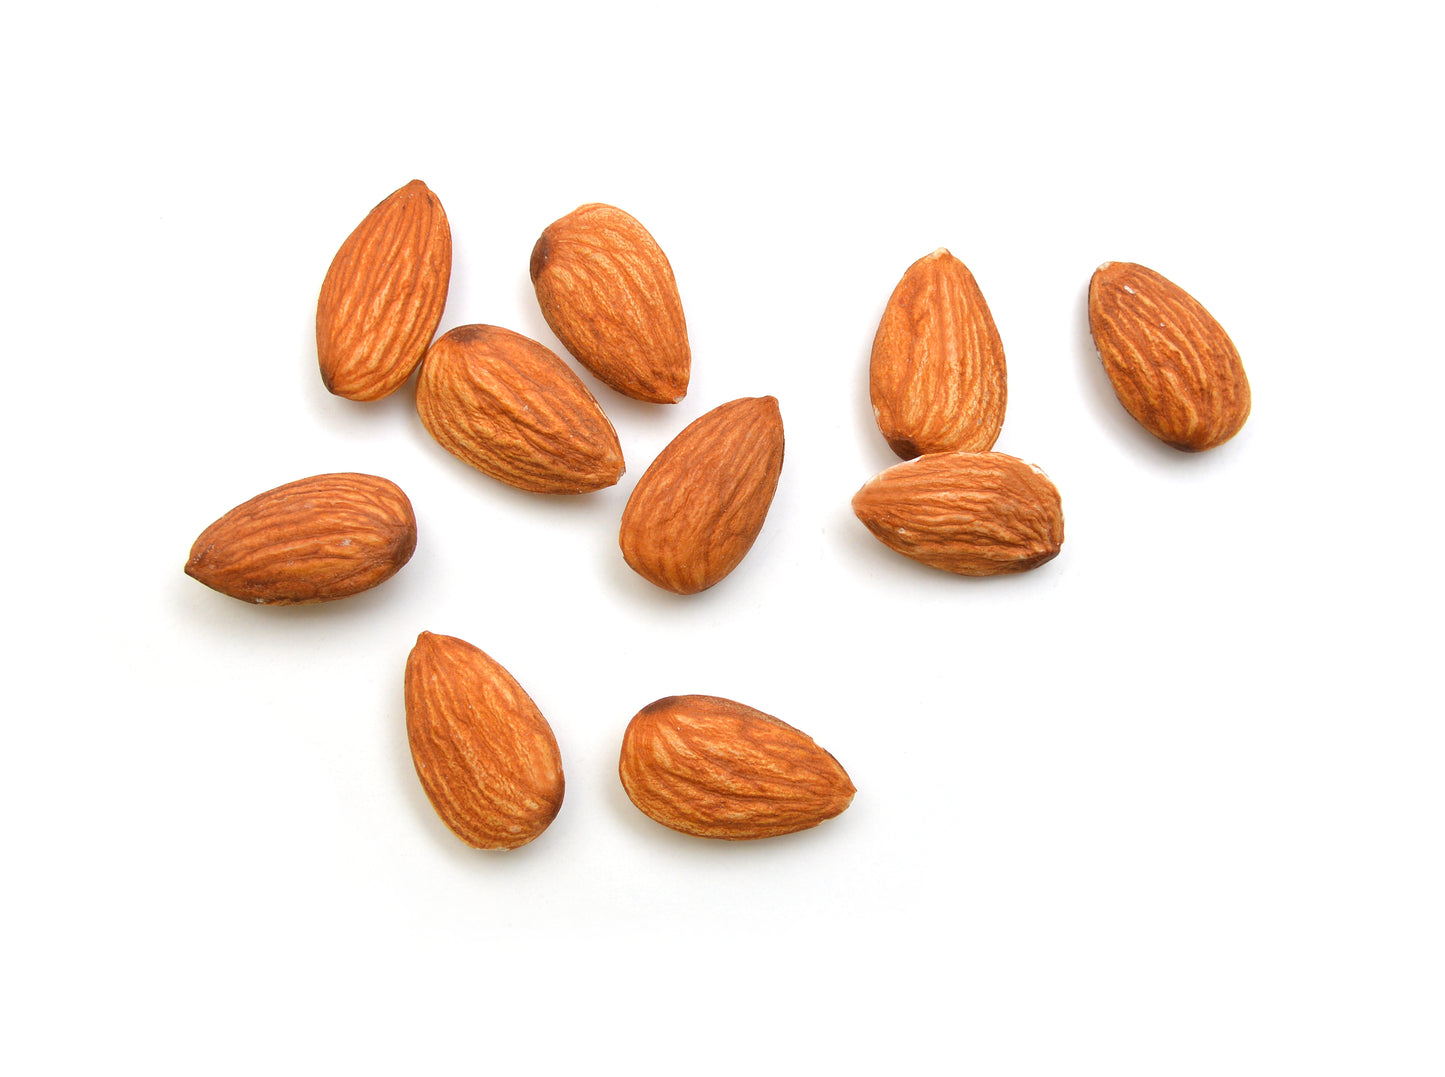 Almonds - Local Raw Pesticide Free 100g